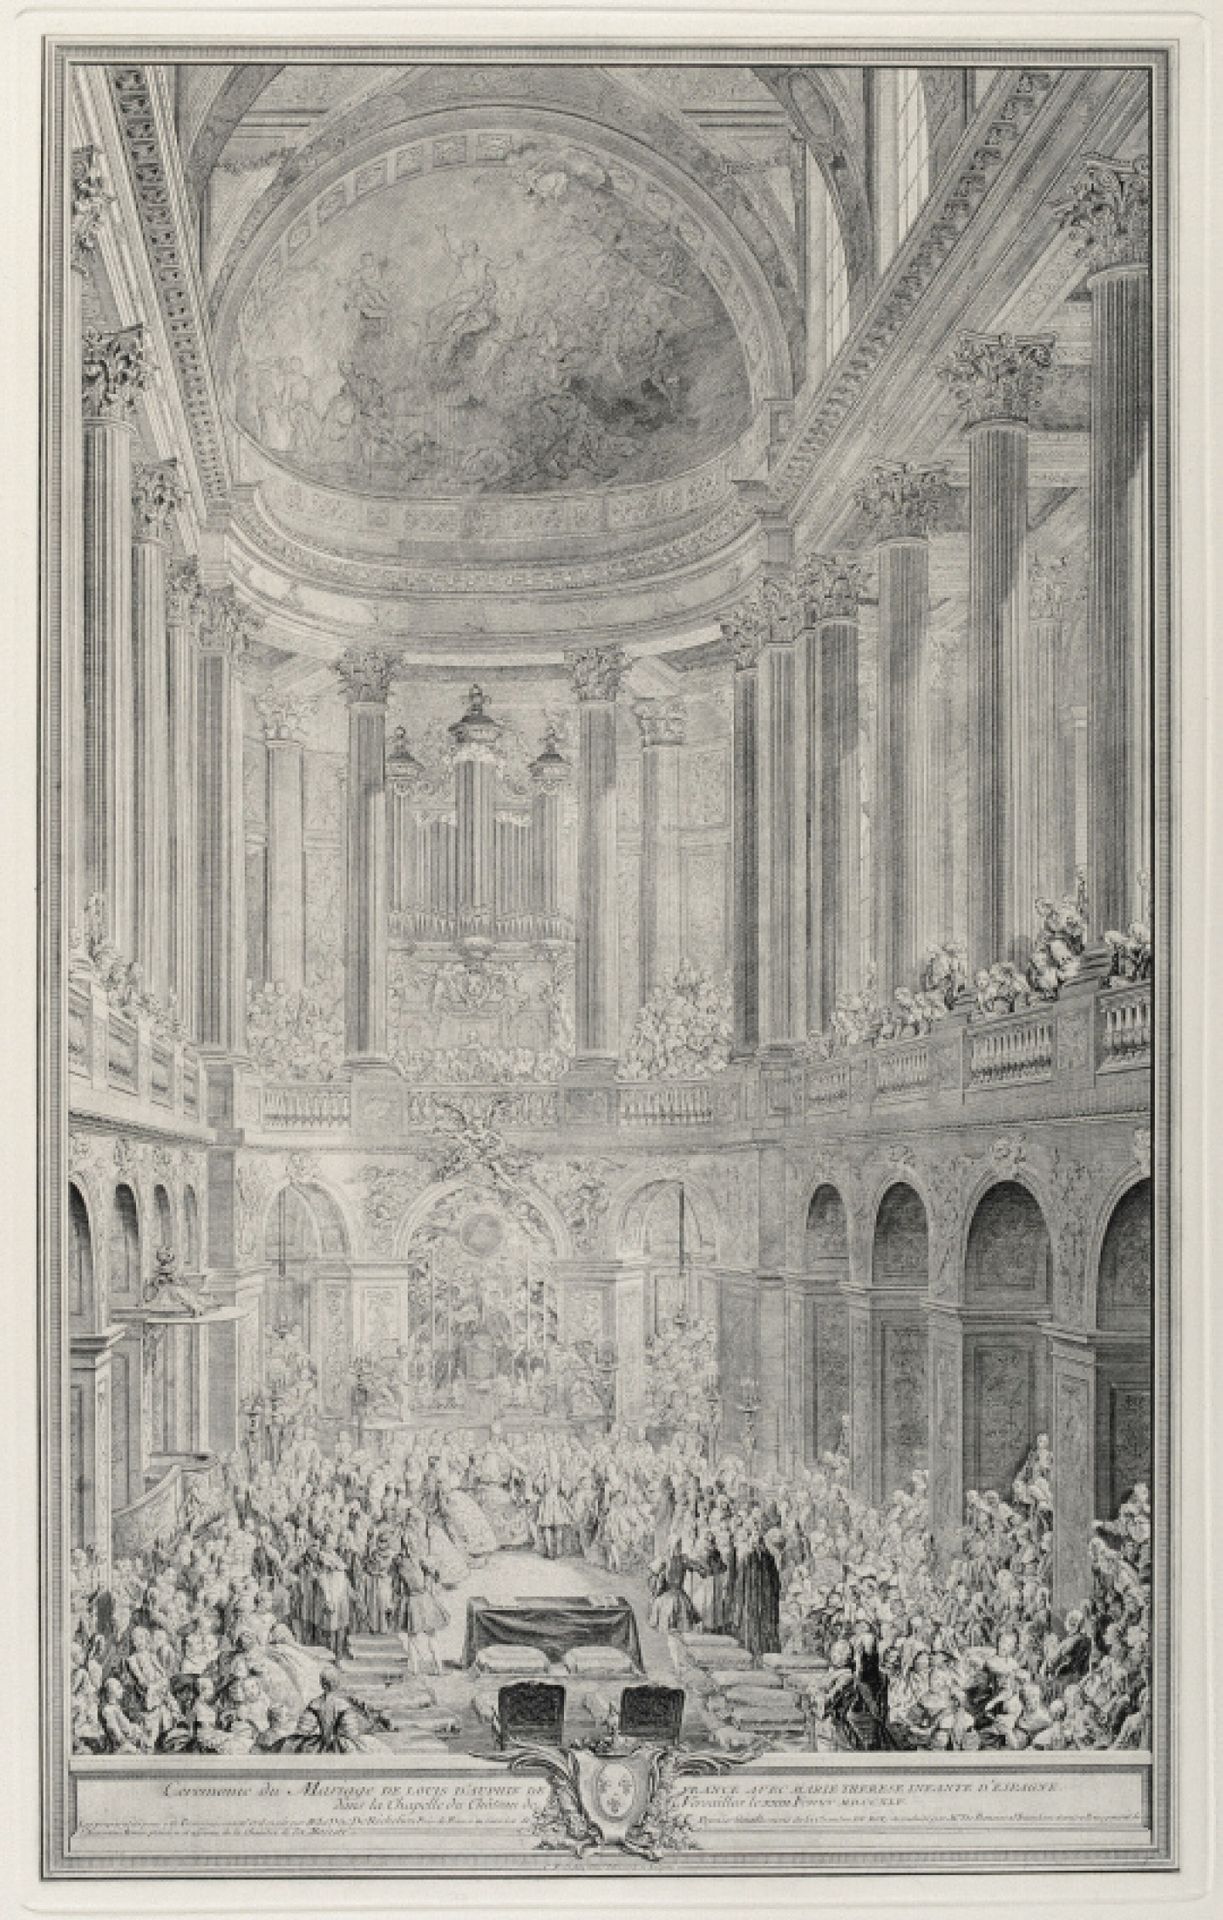 Null 在儿子查尔斯-尼古拉-库欣（1715-1790）之后

法国路易王储与西班牙玛丽亚-特蕾莎女皇2月23日在凡尔赛宫小教堂举行的婚礼仪式 DCCXLV"&hellip;